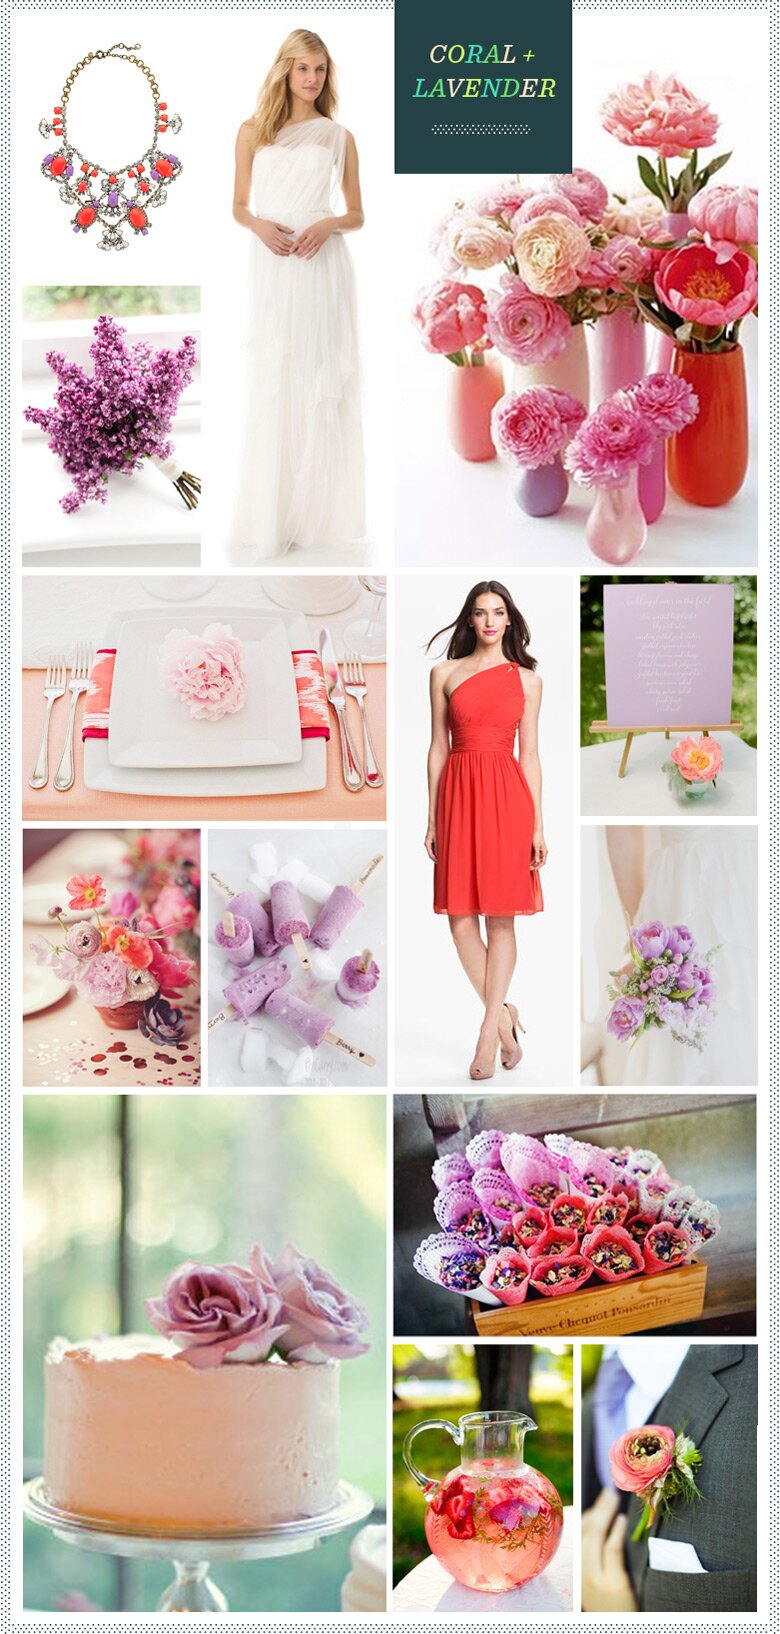 REVEL: Coral + Lavender Wedding Inspiration